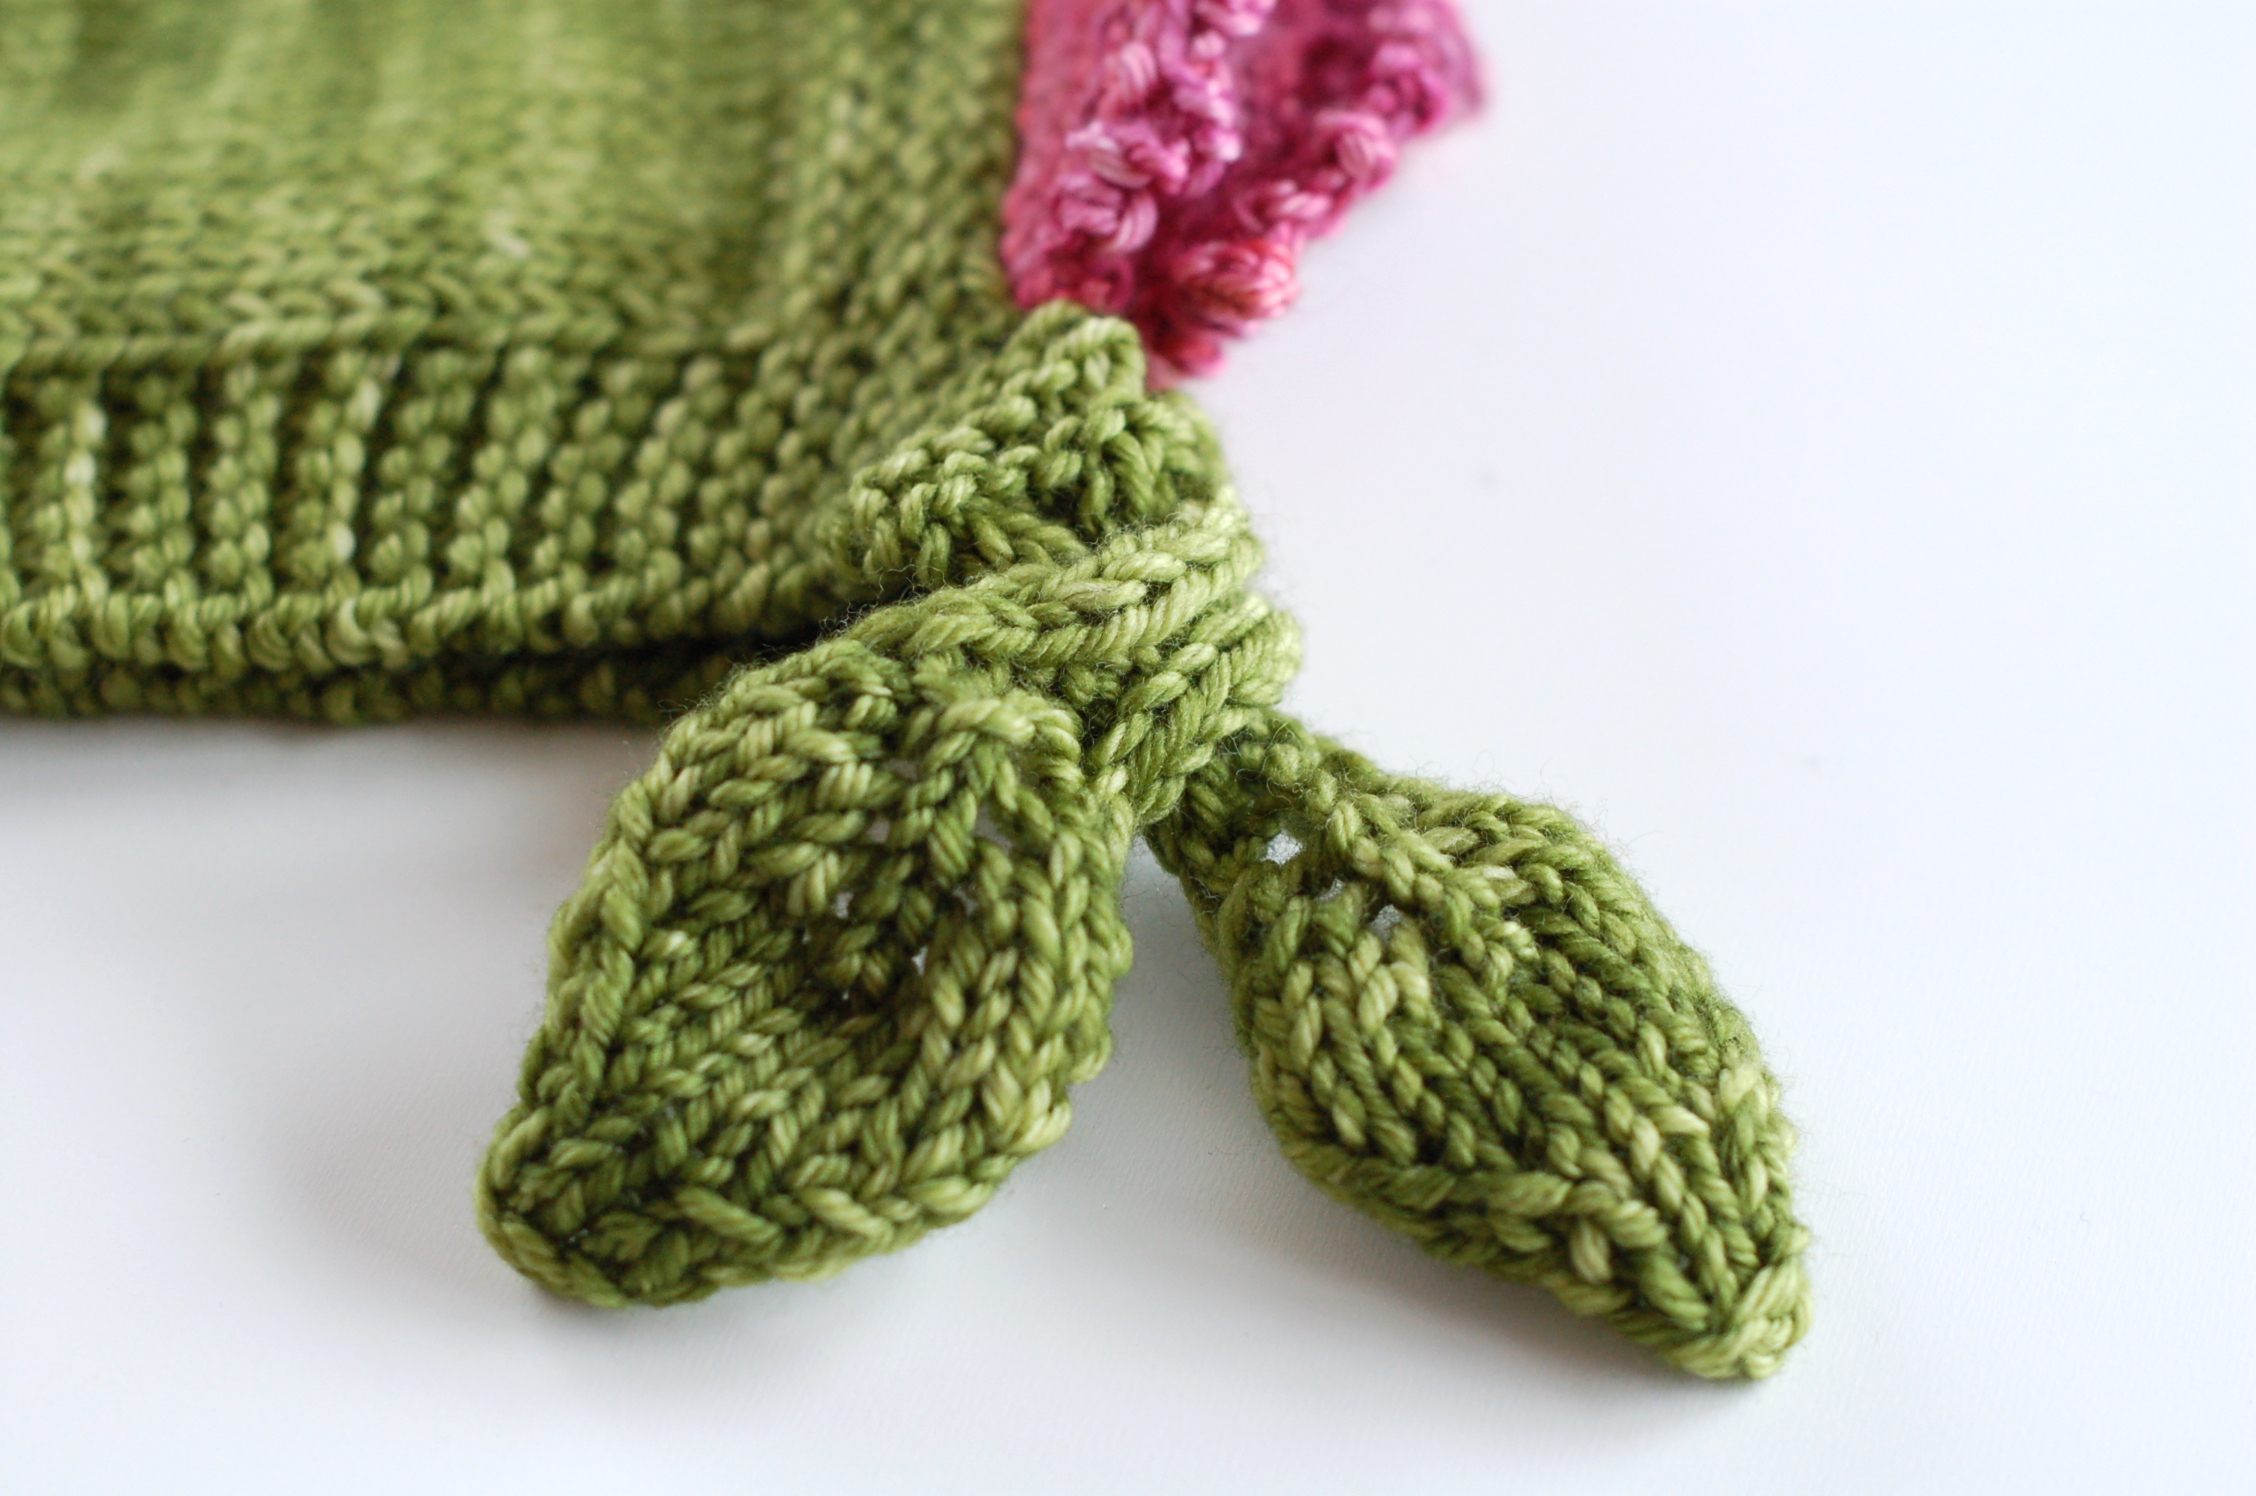 Buds and Blossoms Bonnet knitting pattern by Lisa Chemery - Frogginette Knitting Patterns